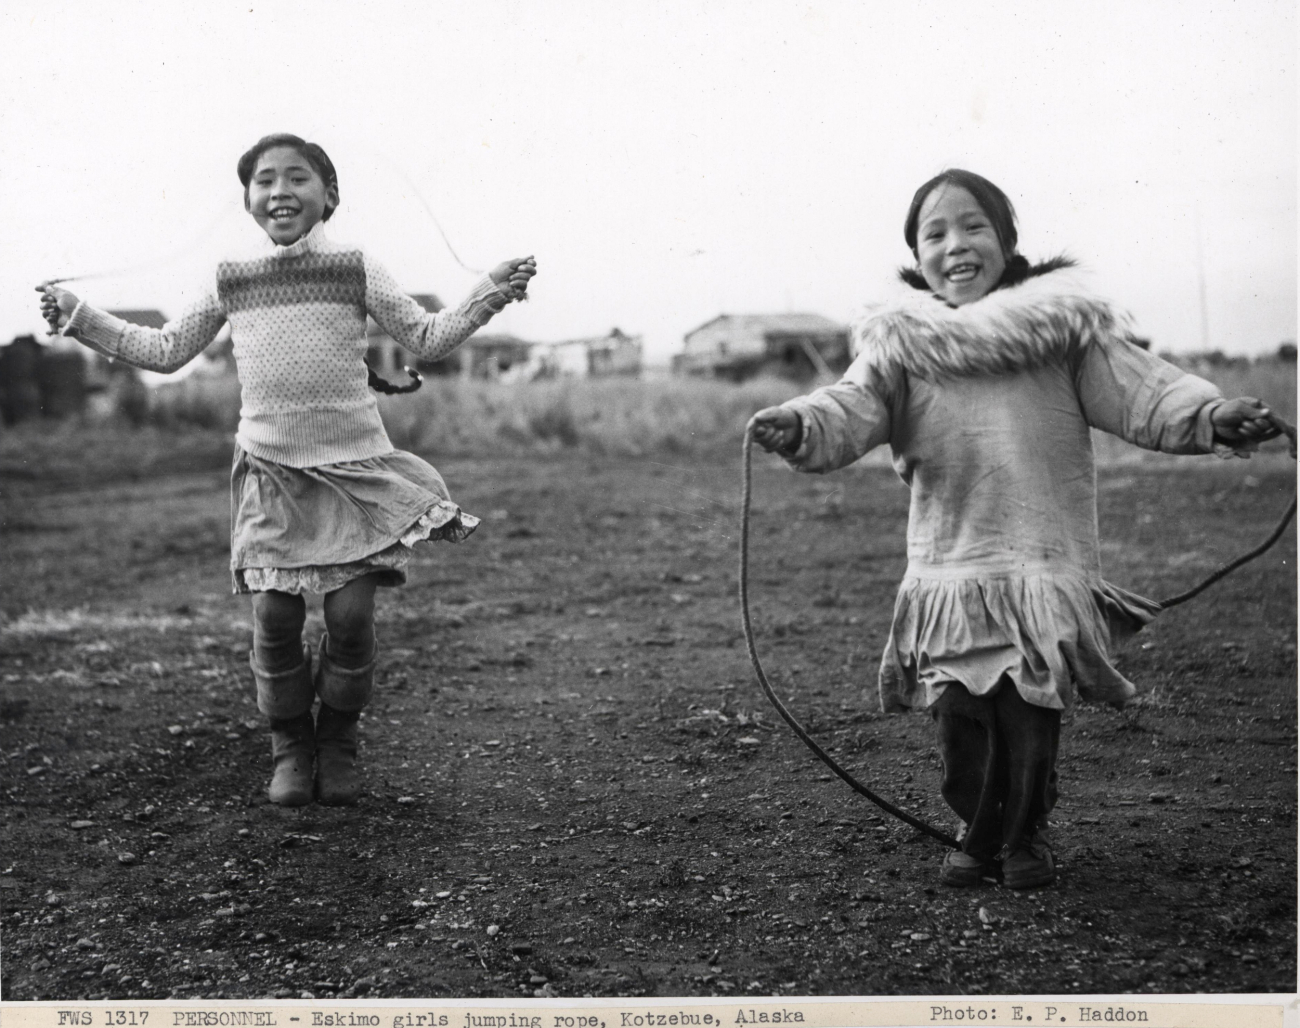 Eskimo girls jumping rope